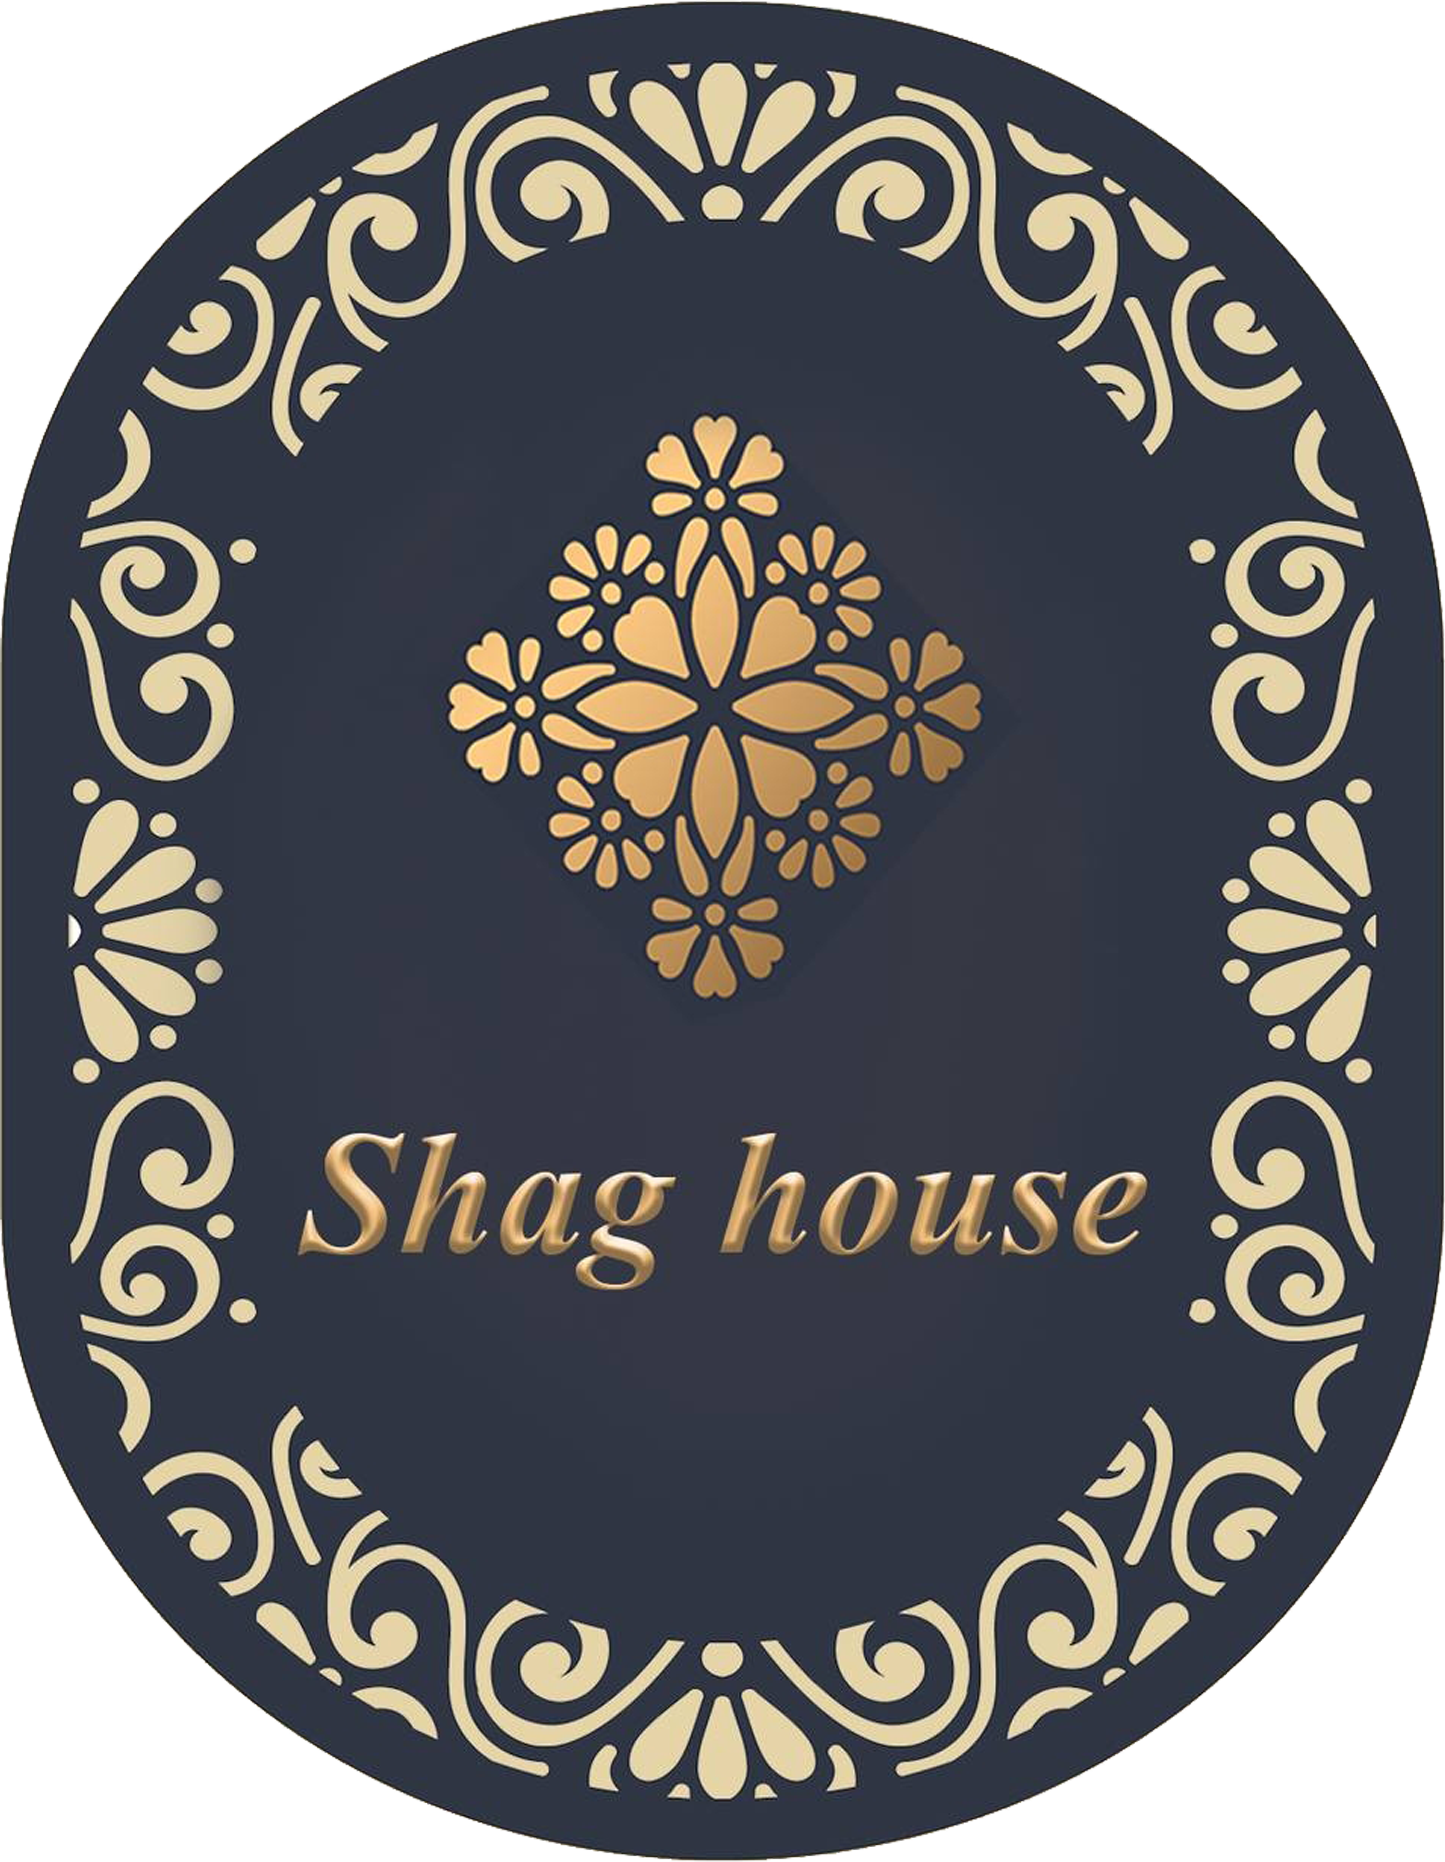 ShagHouse One